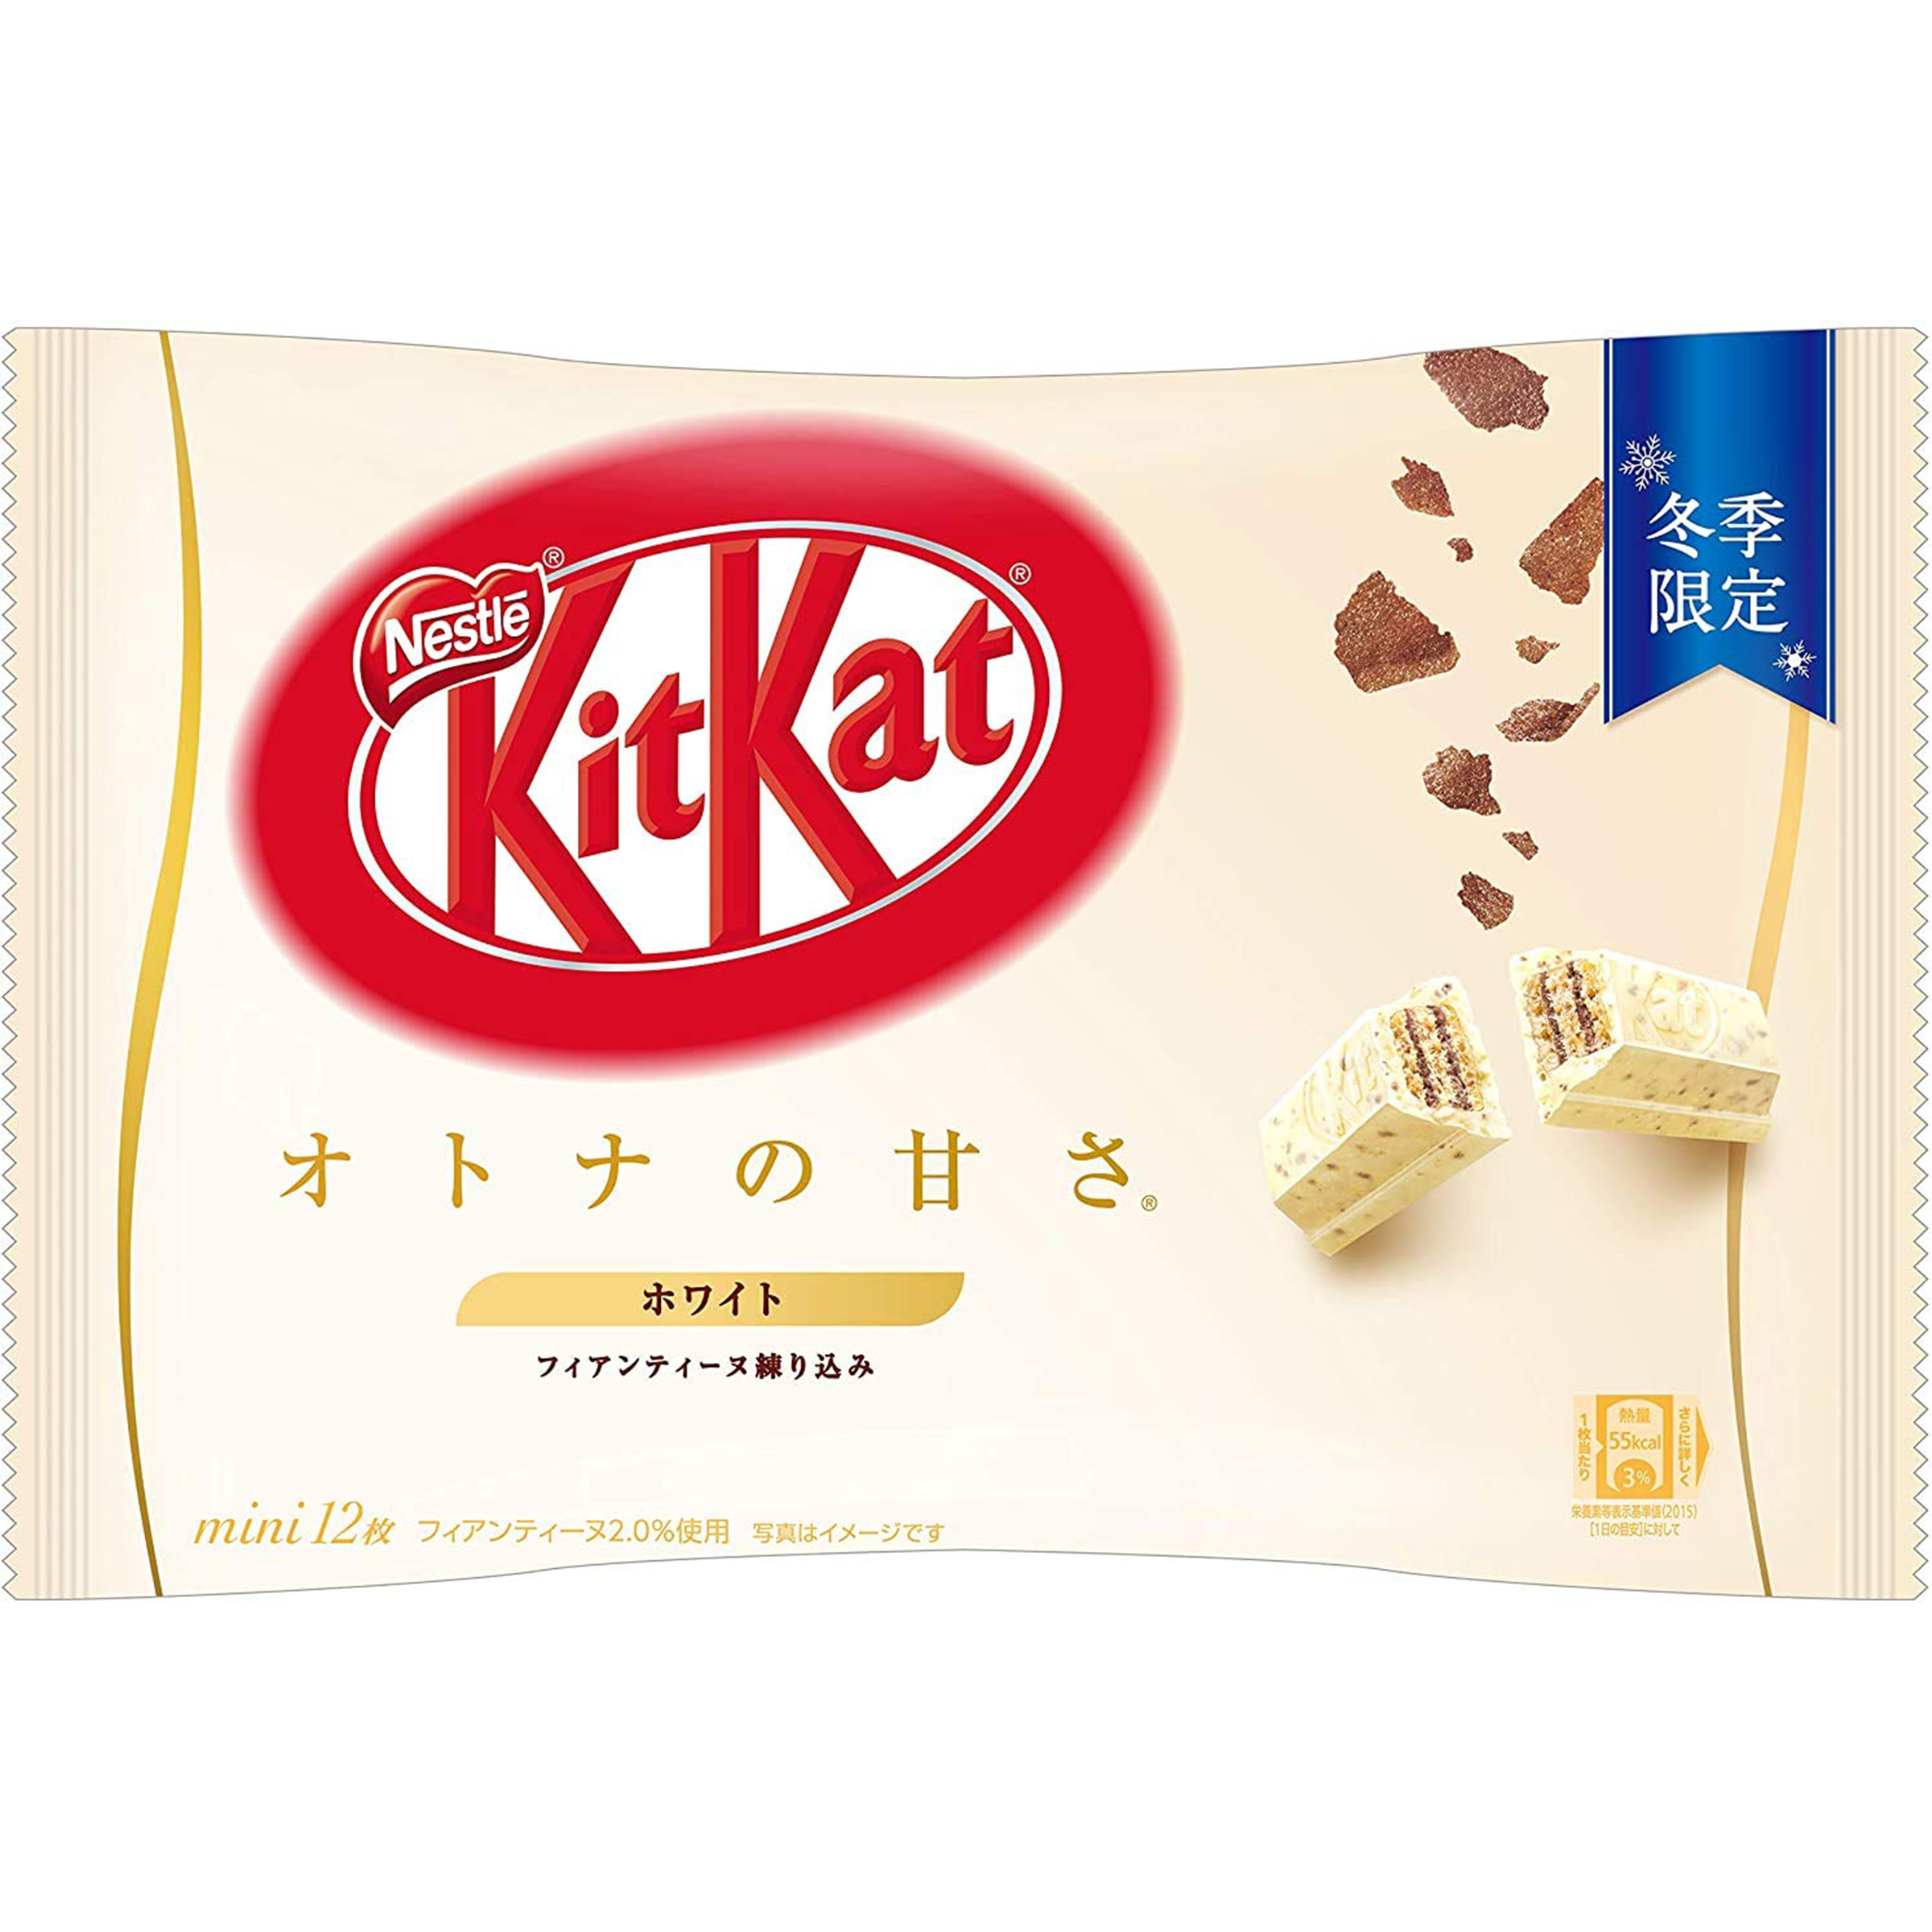 Kit Kat White Chocolate - Japan